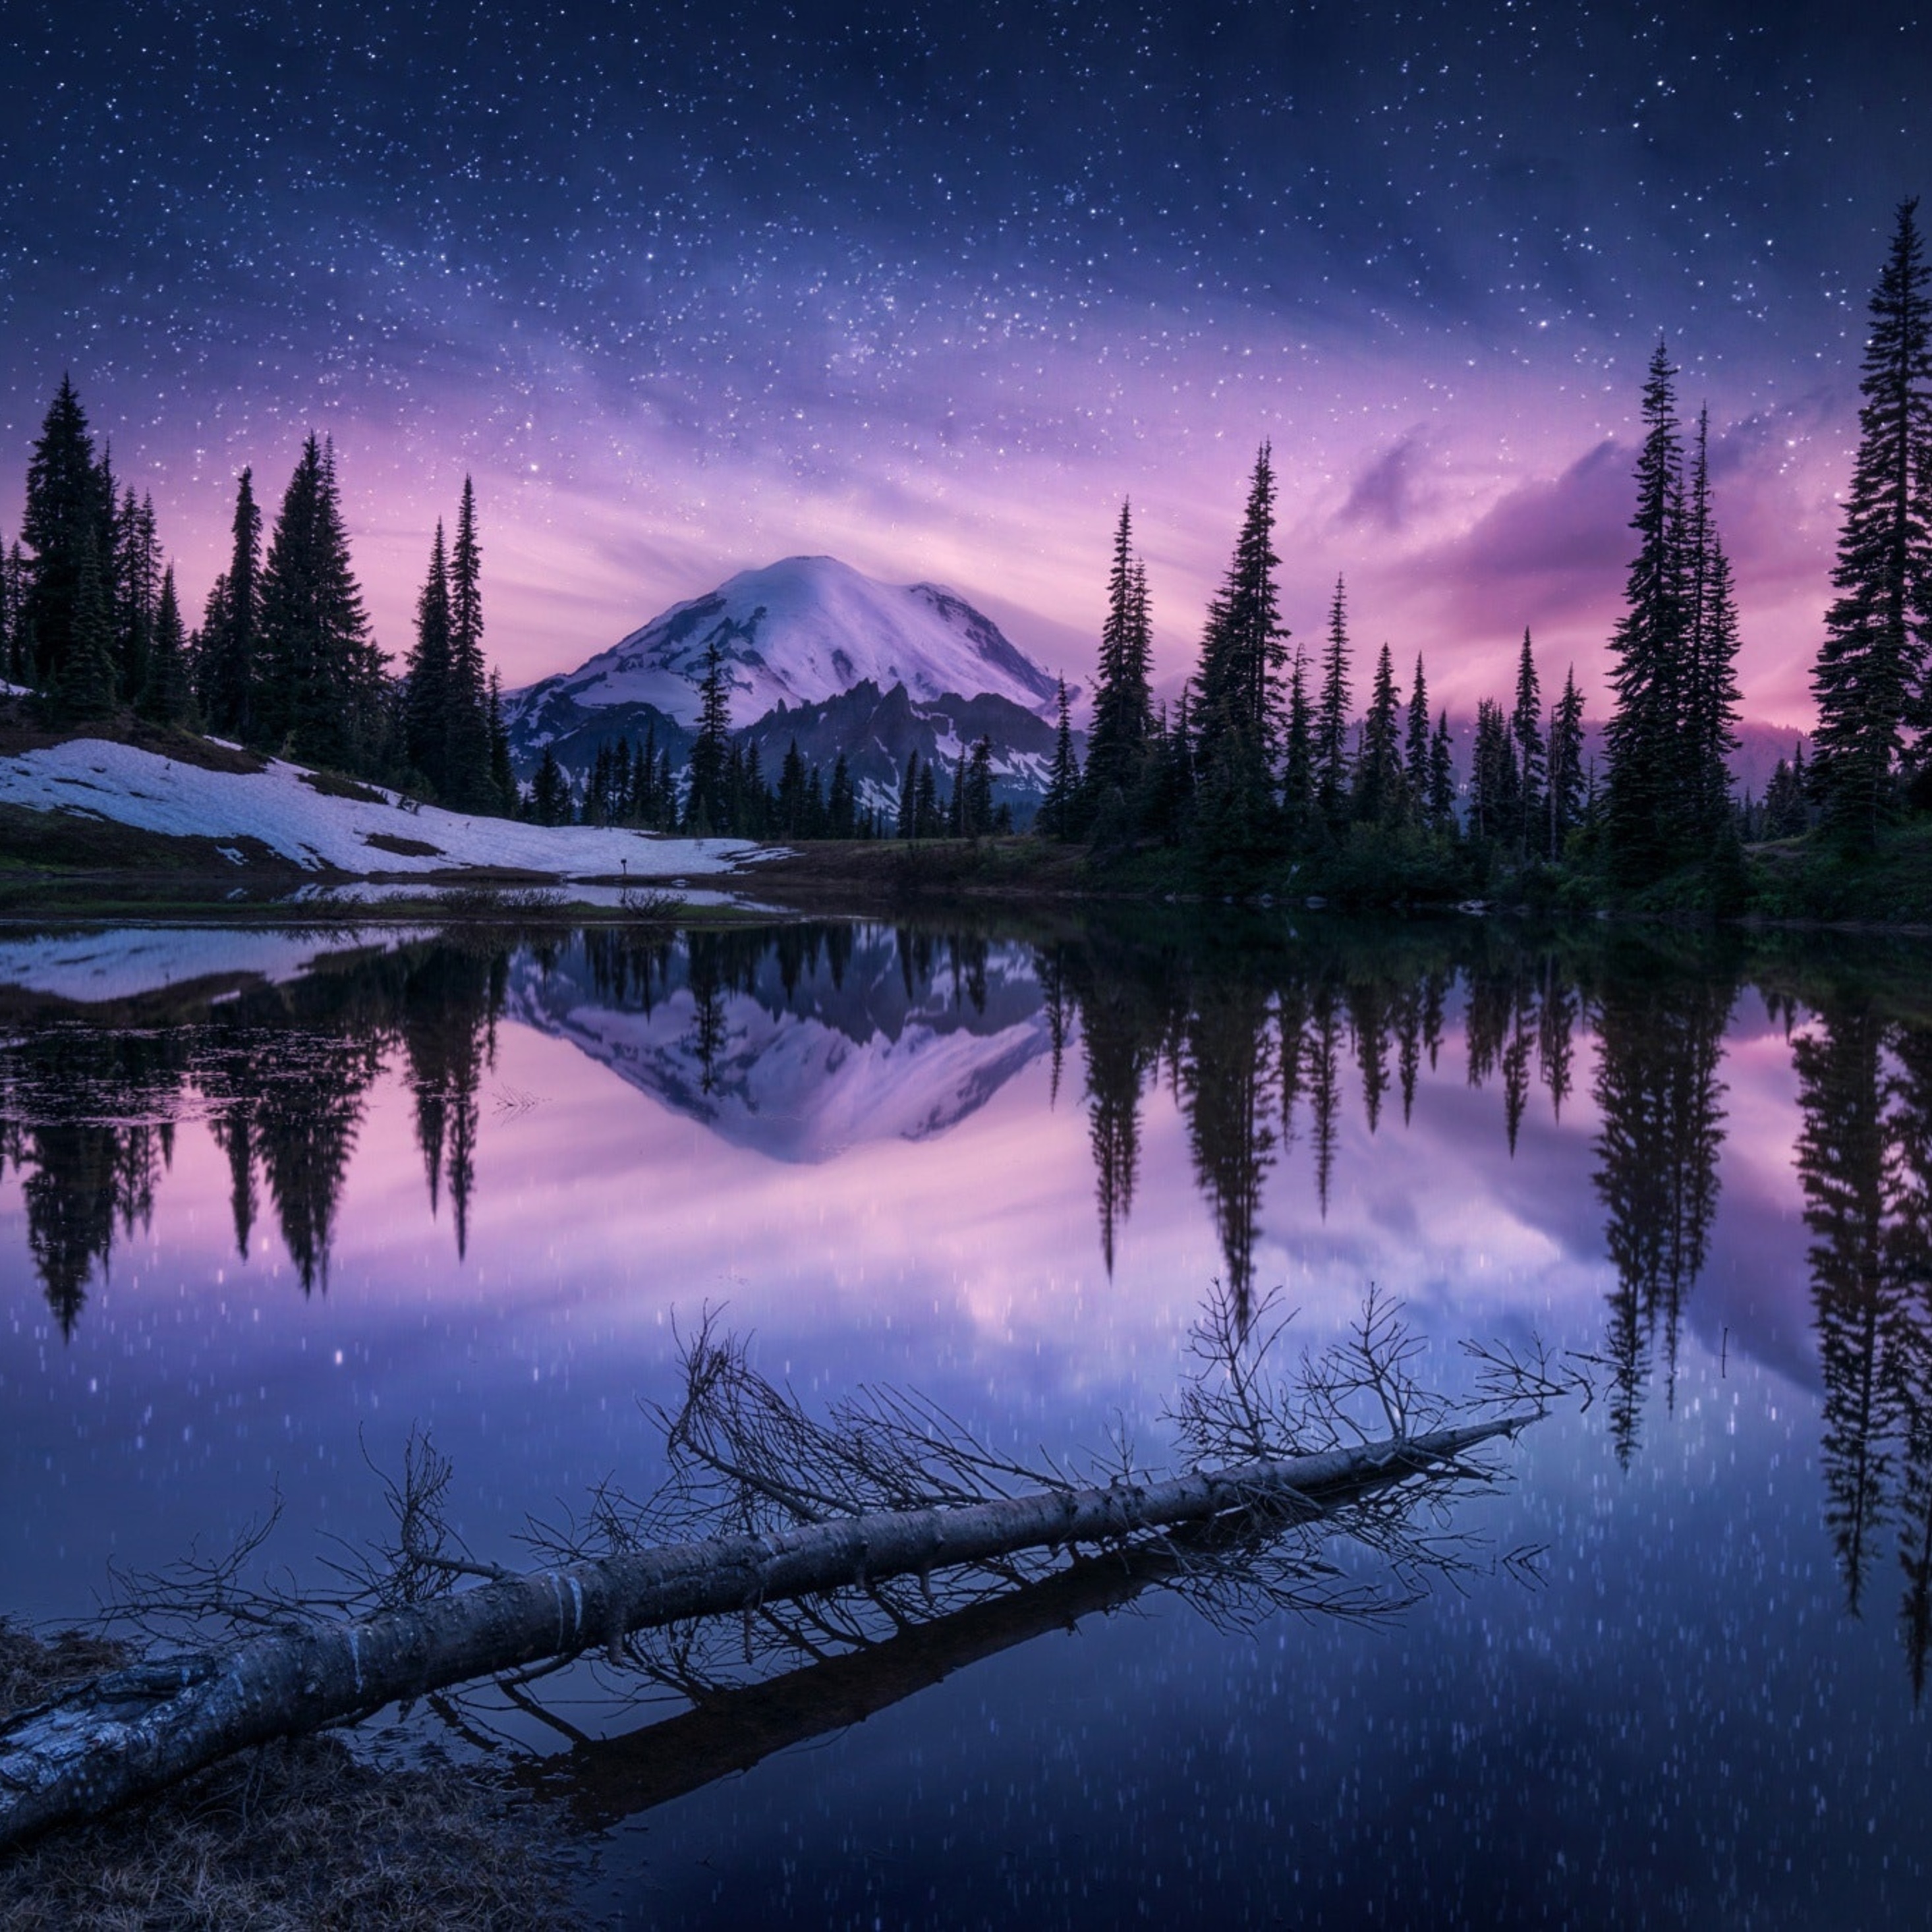 Lake Nature Night Reflection iPad Pro Retina Display HD 4k Wallpaper, Image, Background, Photo and Picture